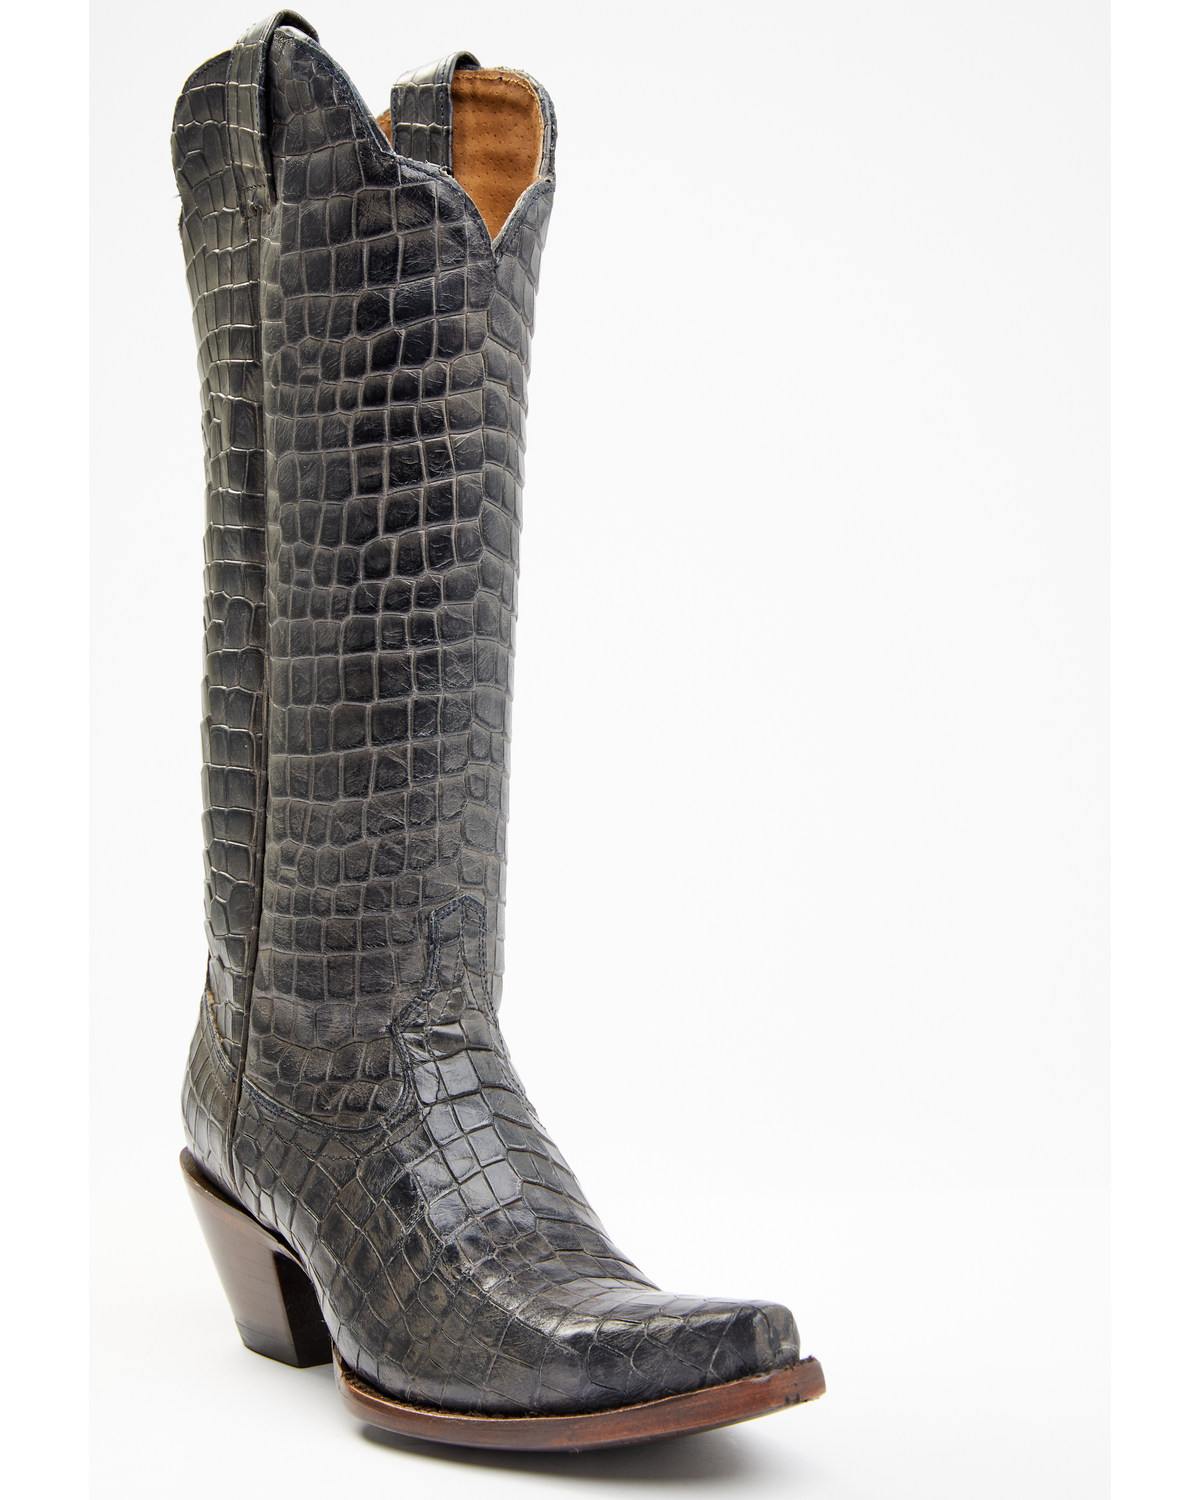 Idyllwind Women's Strut Western Boots - Snip Toe